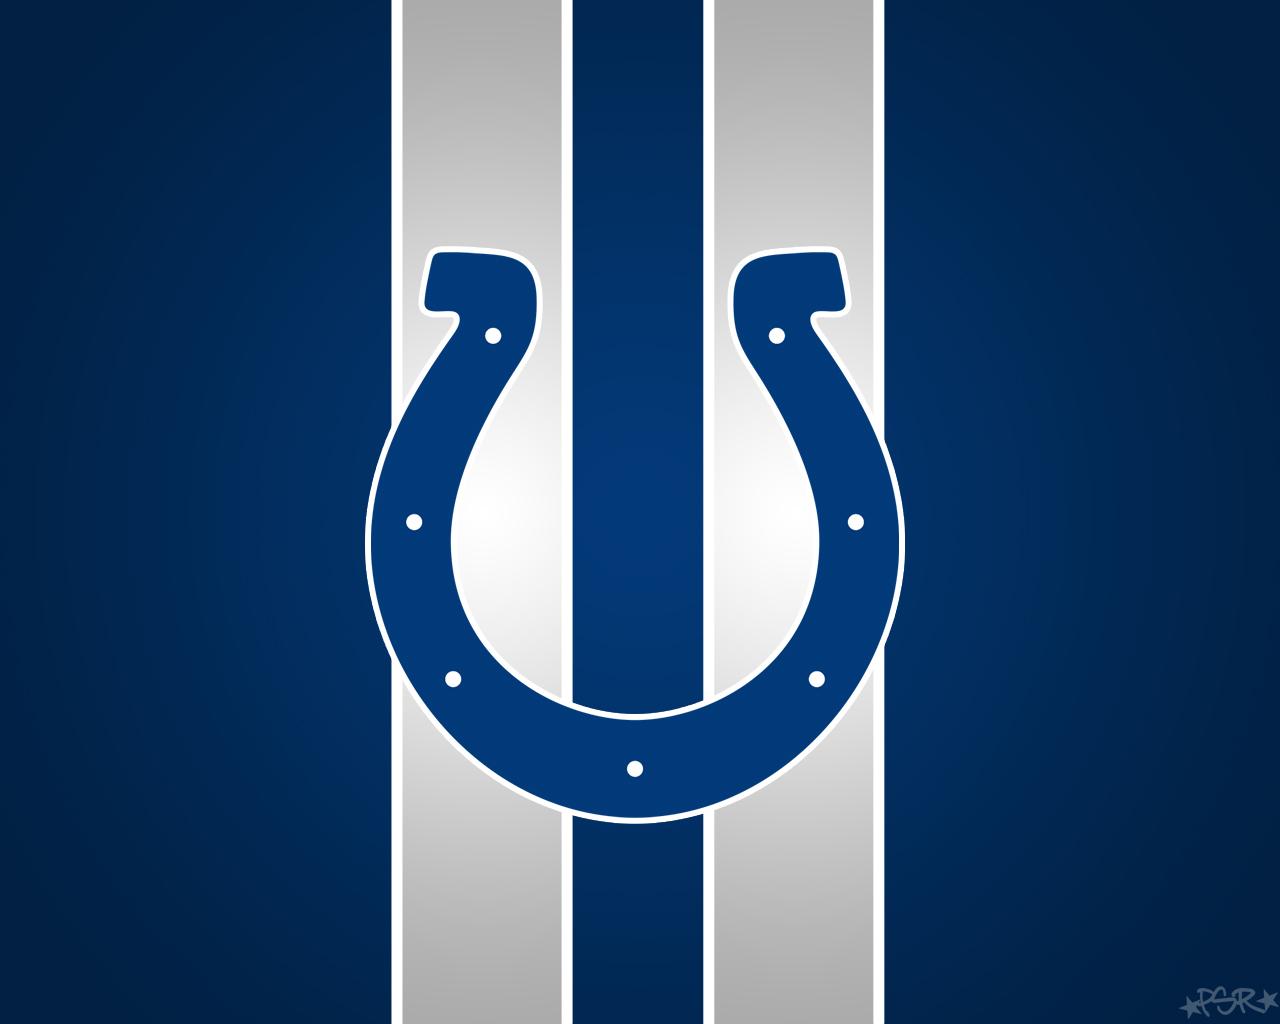 More Indianapolis Colts Wallpaper